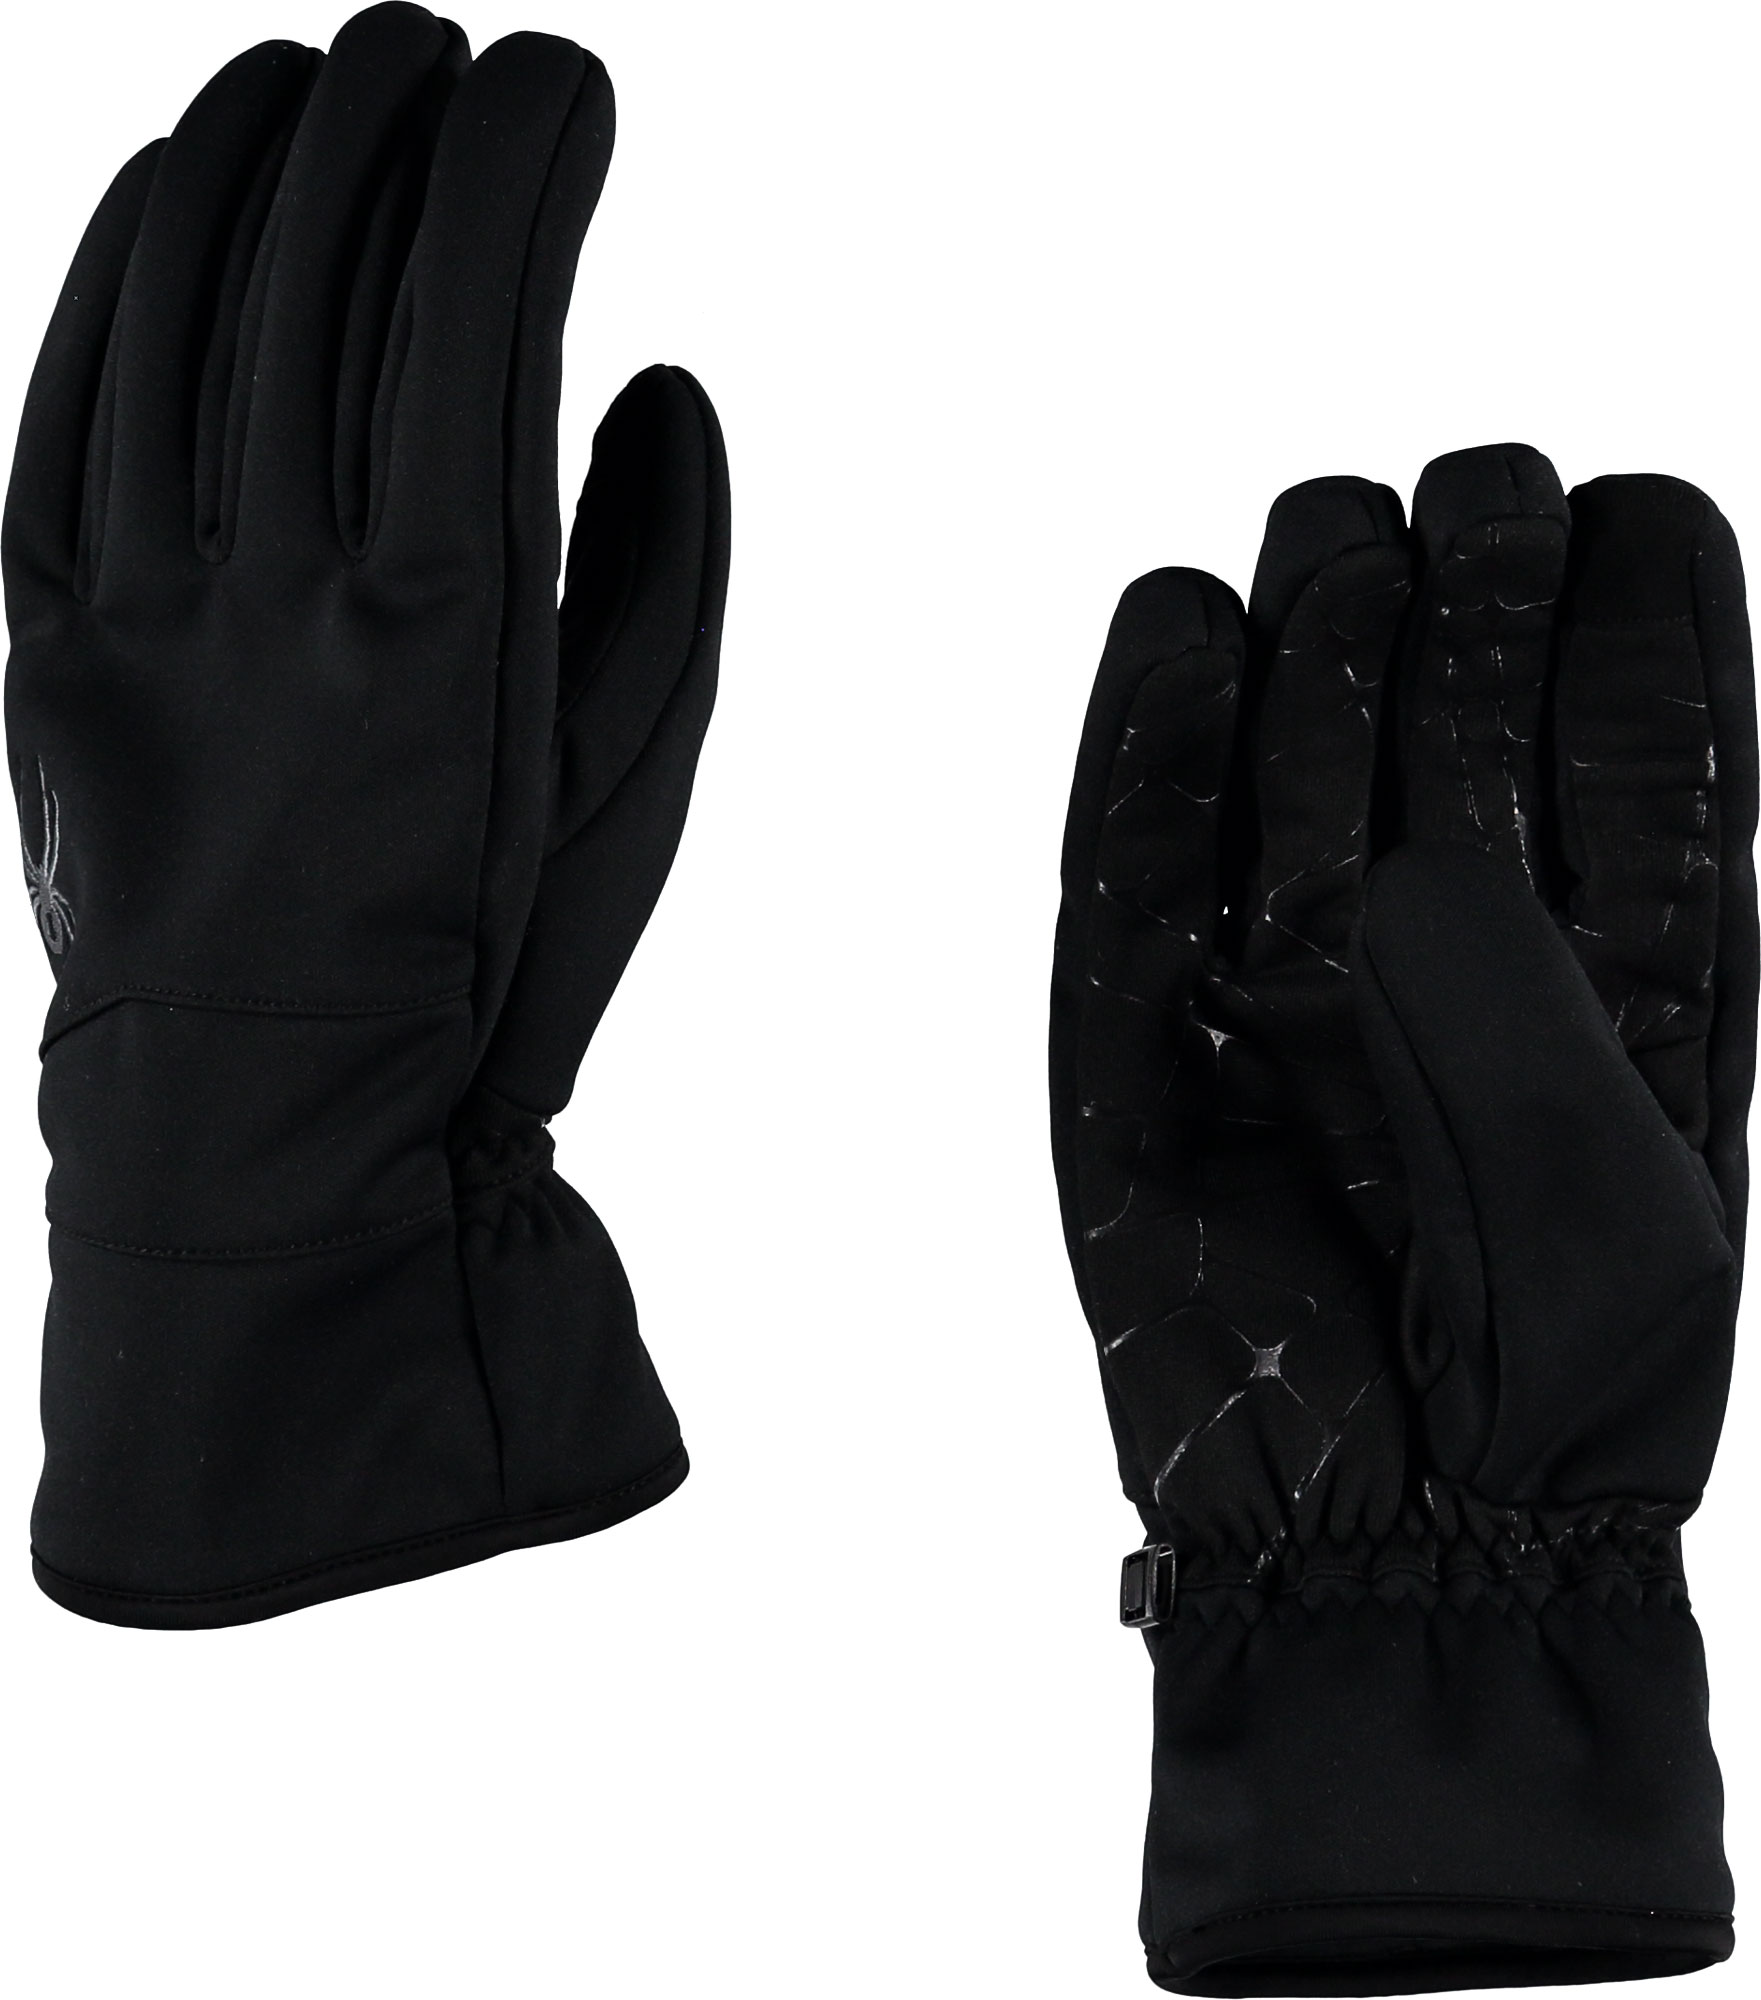 Spyder Men's Facer Conduct Softshell Glove 